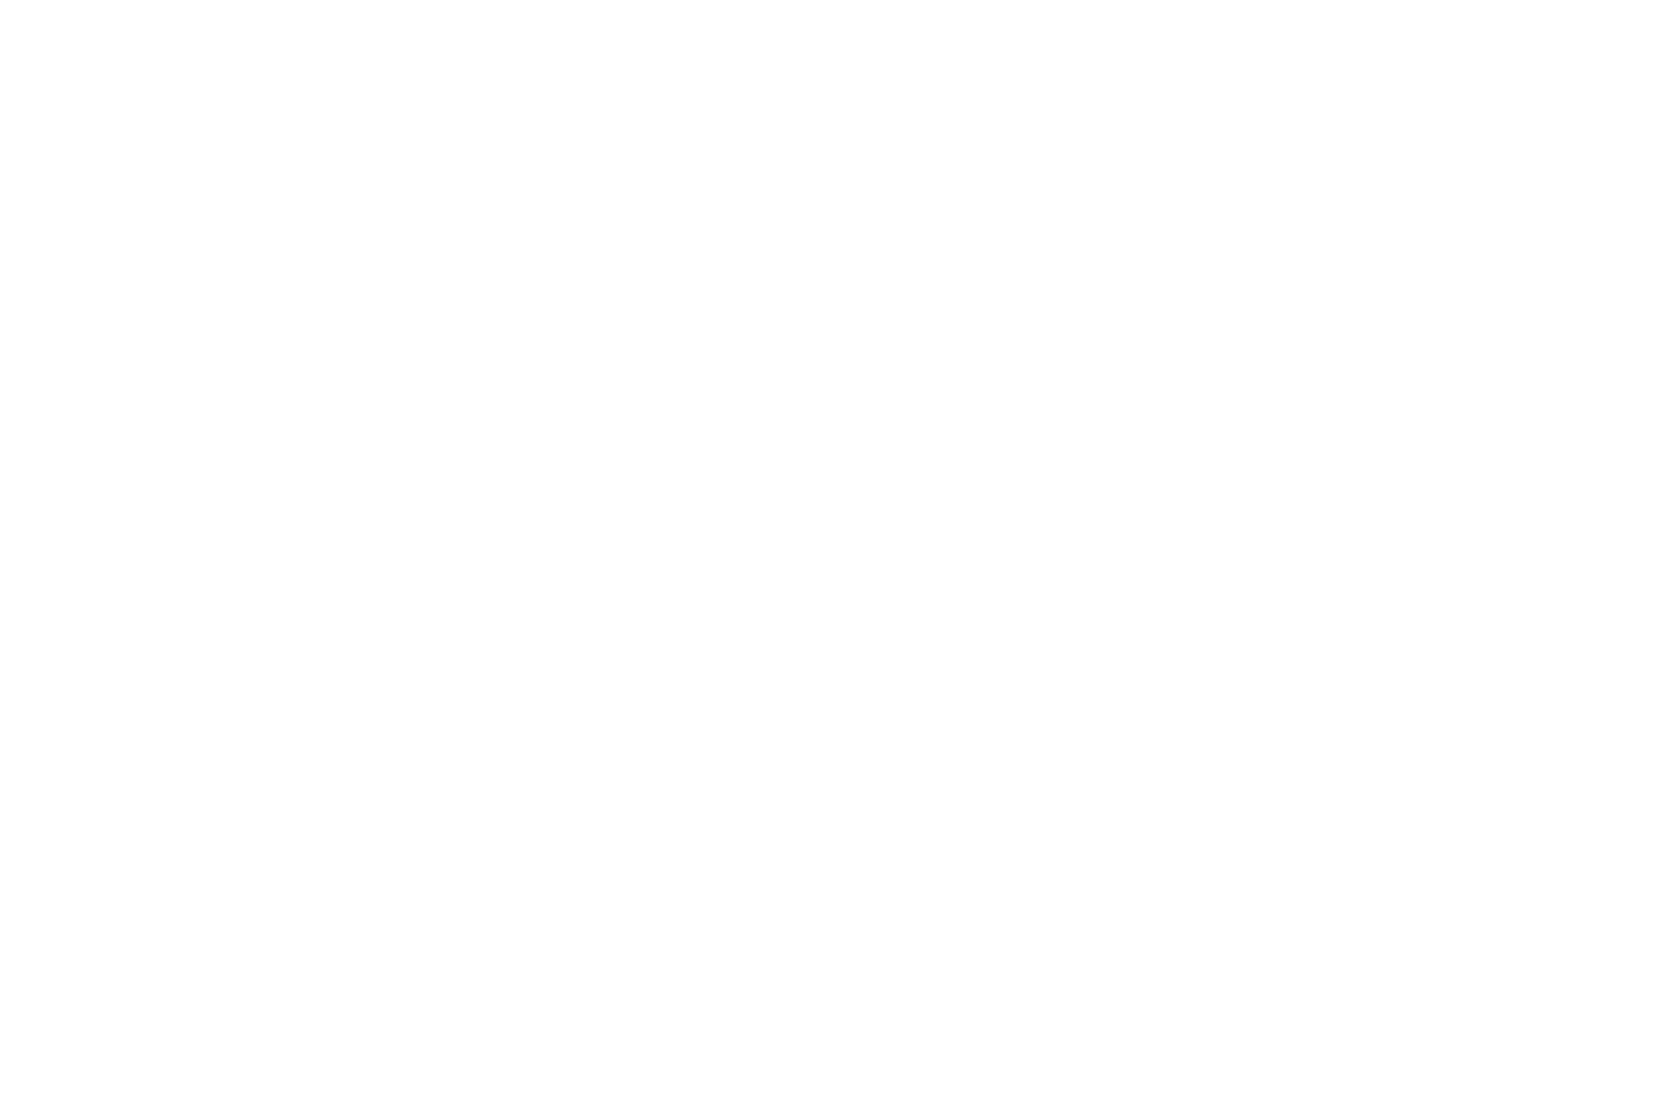 Style, logo example, Templett fonts